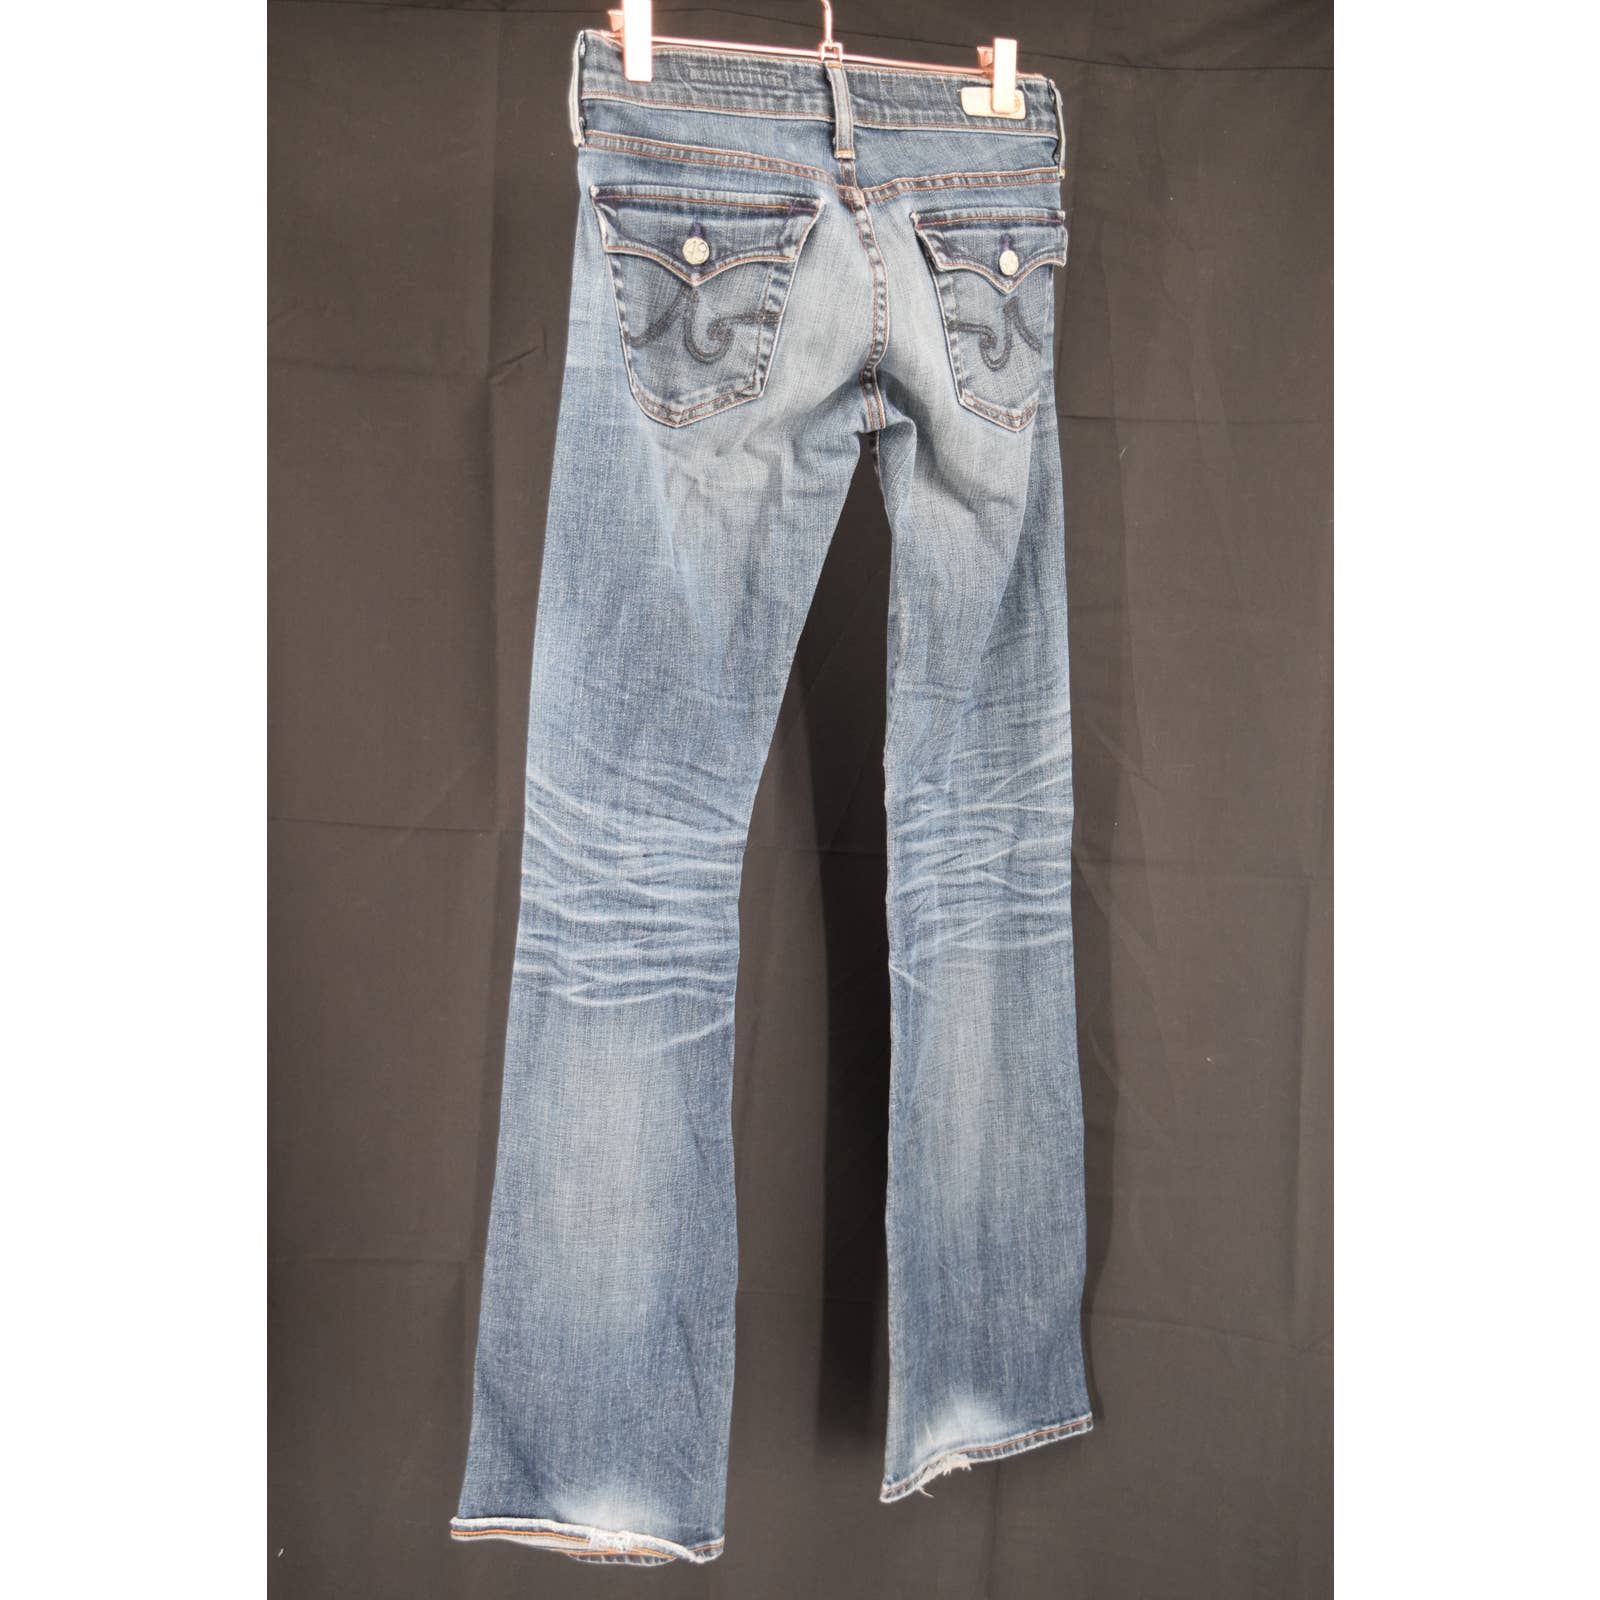 Adriano Goldschmied Decade Flap Straight Leg Jeans - 26 R